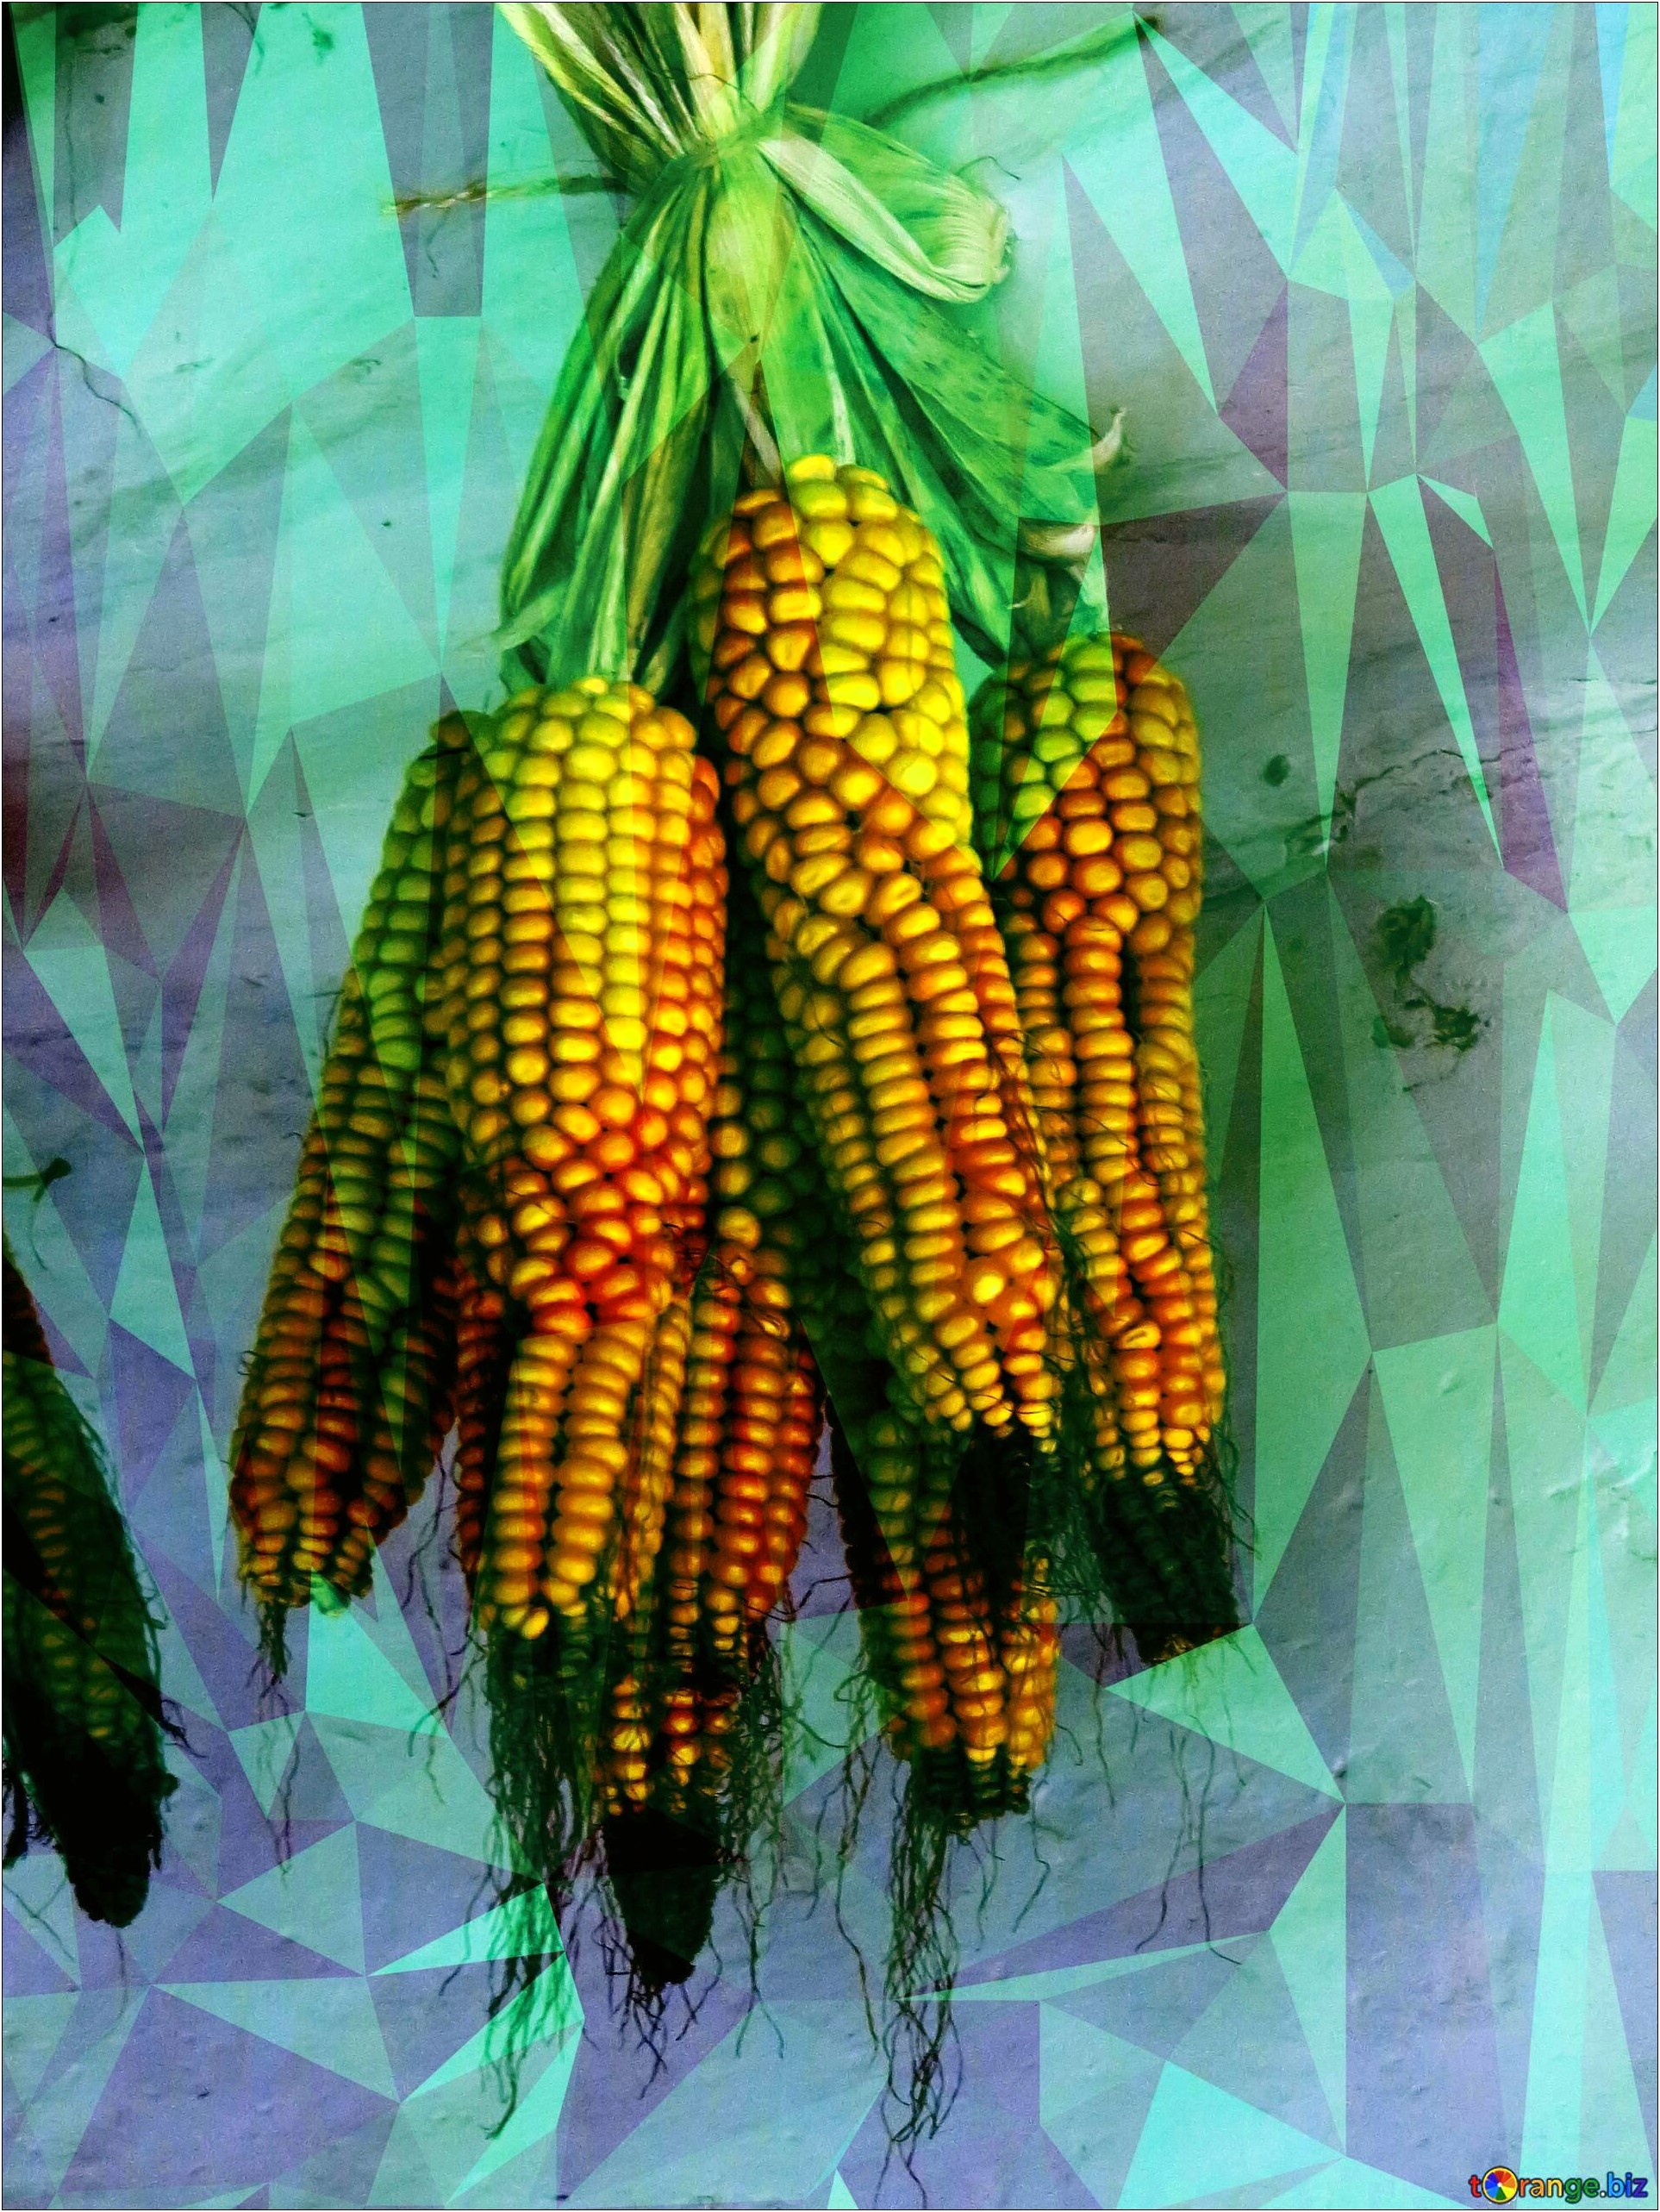 Free Corn On The Cob Template